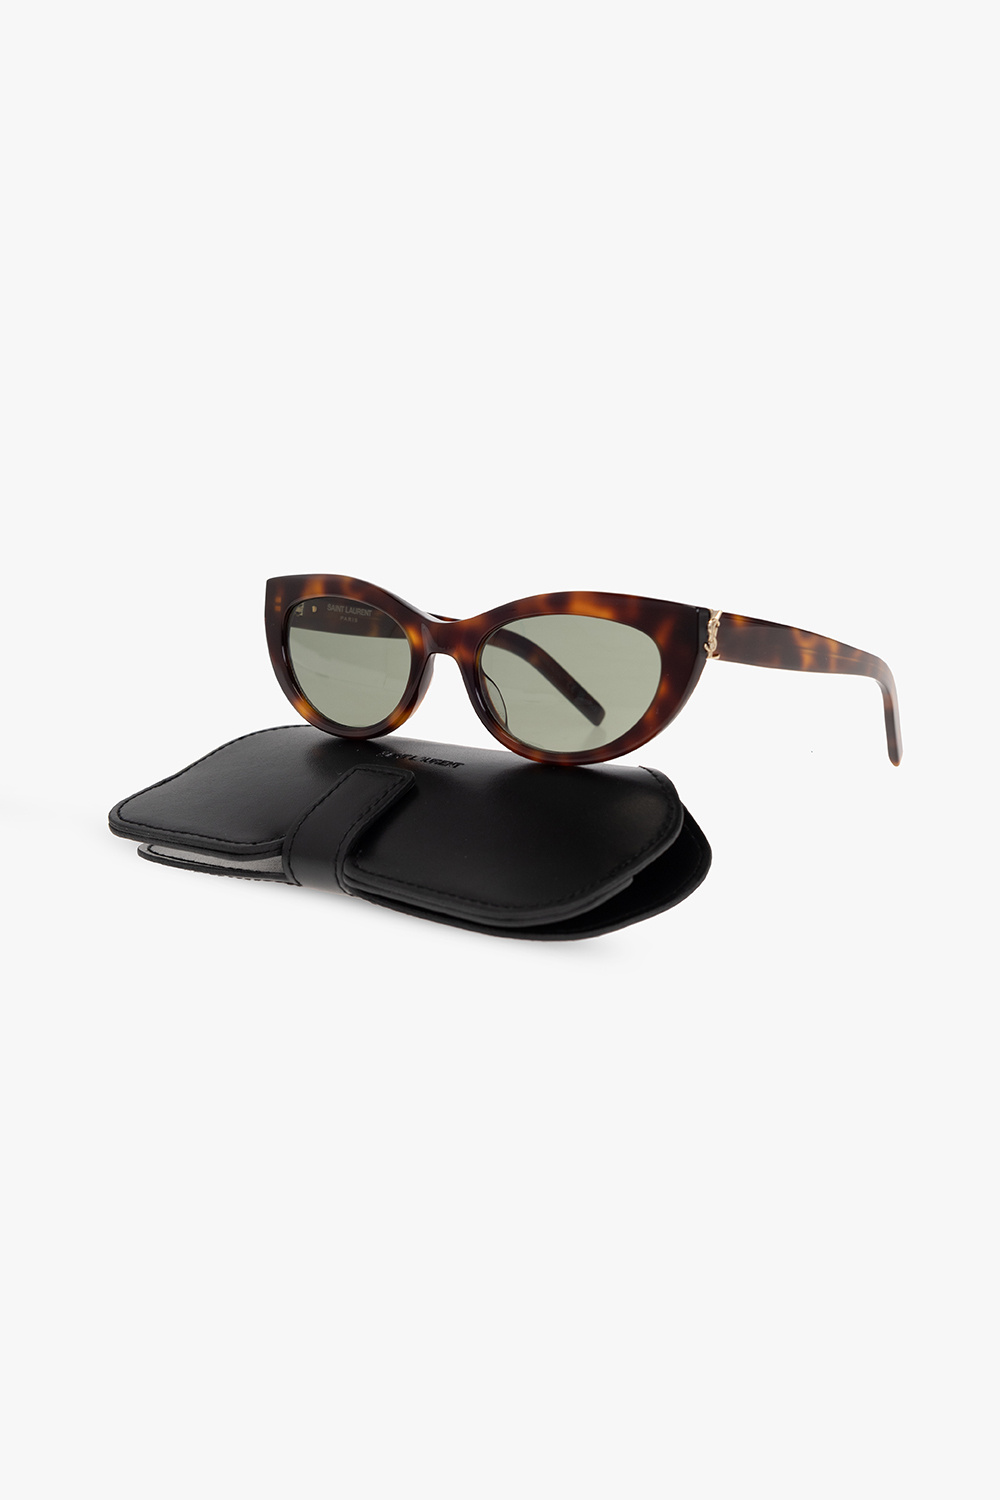 SL M 115 Cat Eye Sunglasses in Black - Saint Laurent